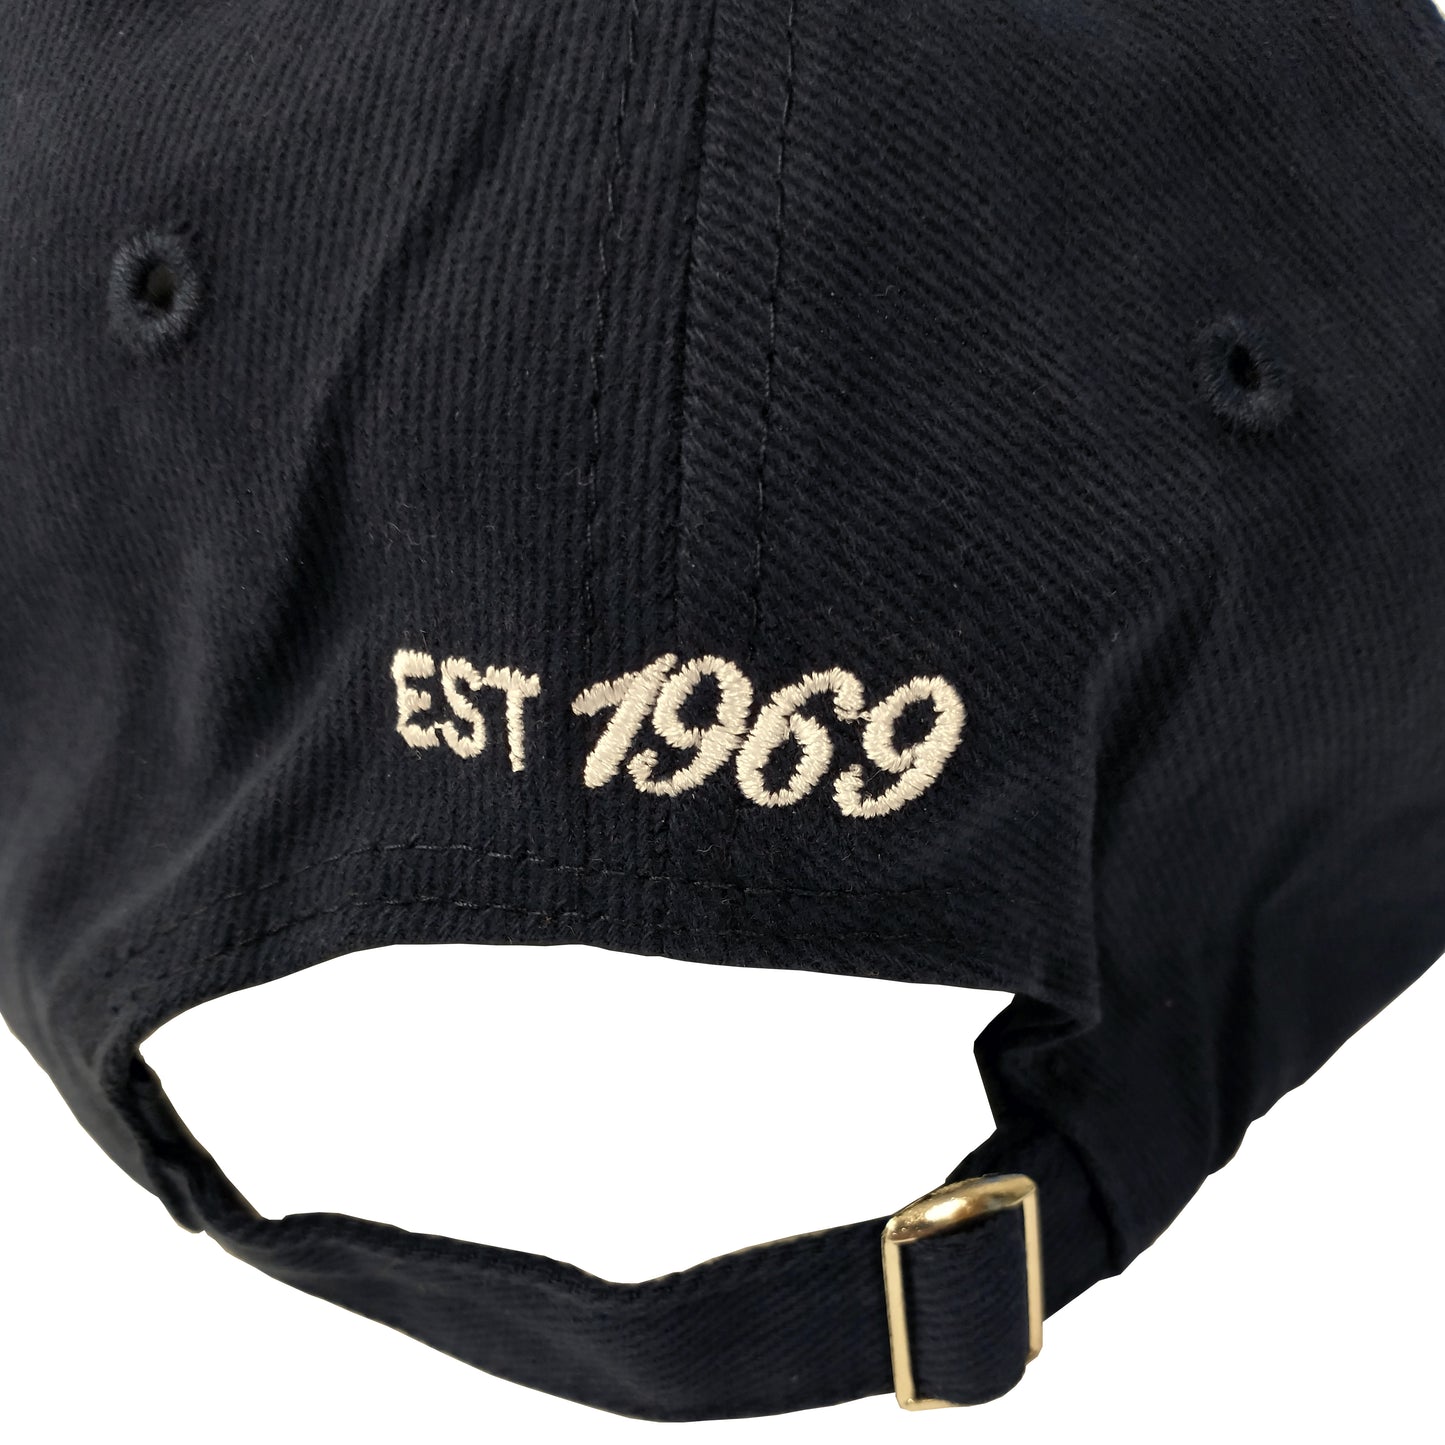 Close up of established 1969 embroidered in white on back of baseball cap above adjustment.